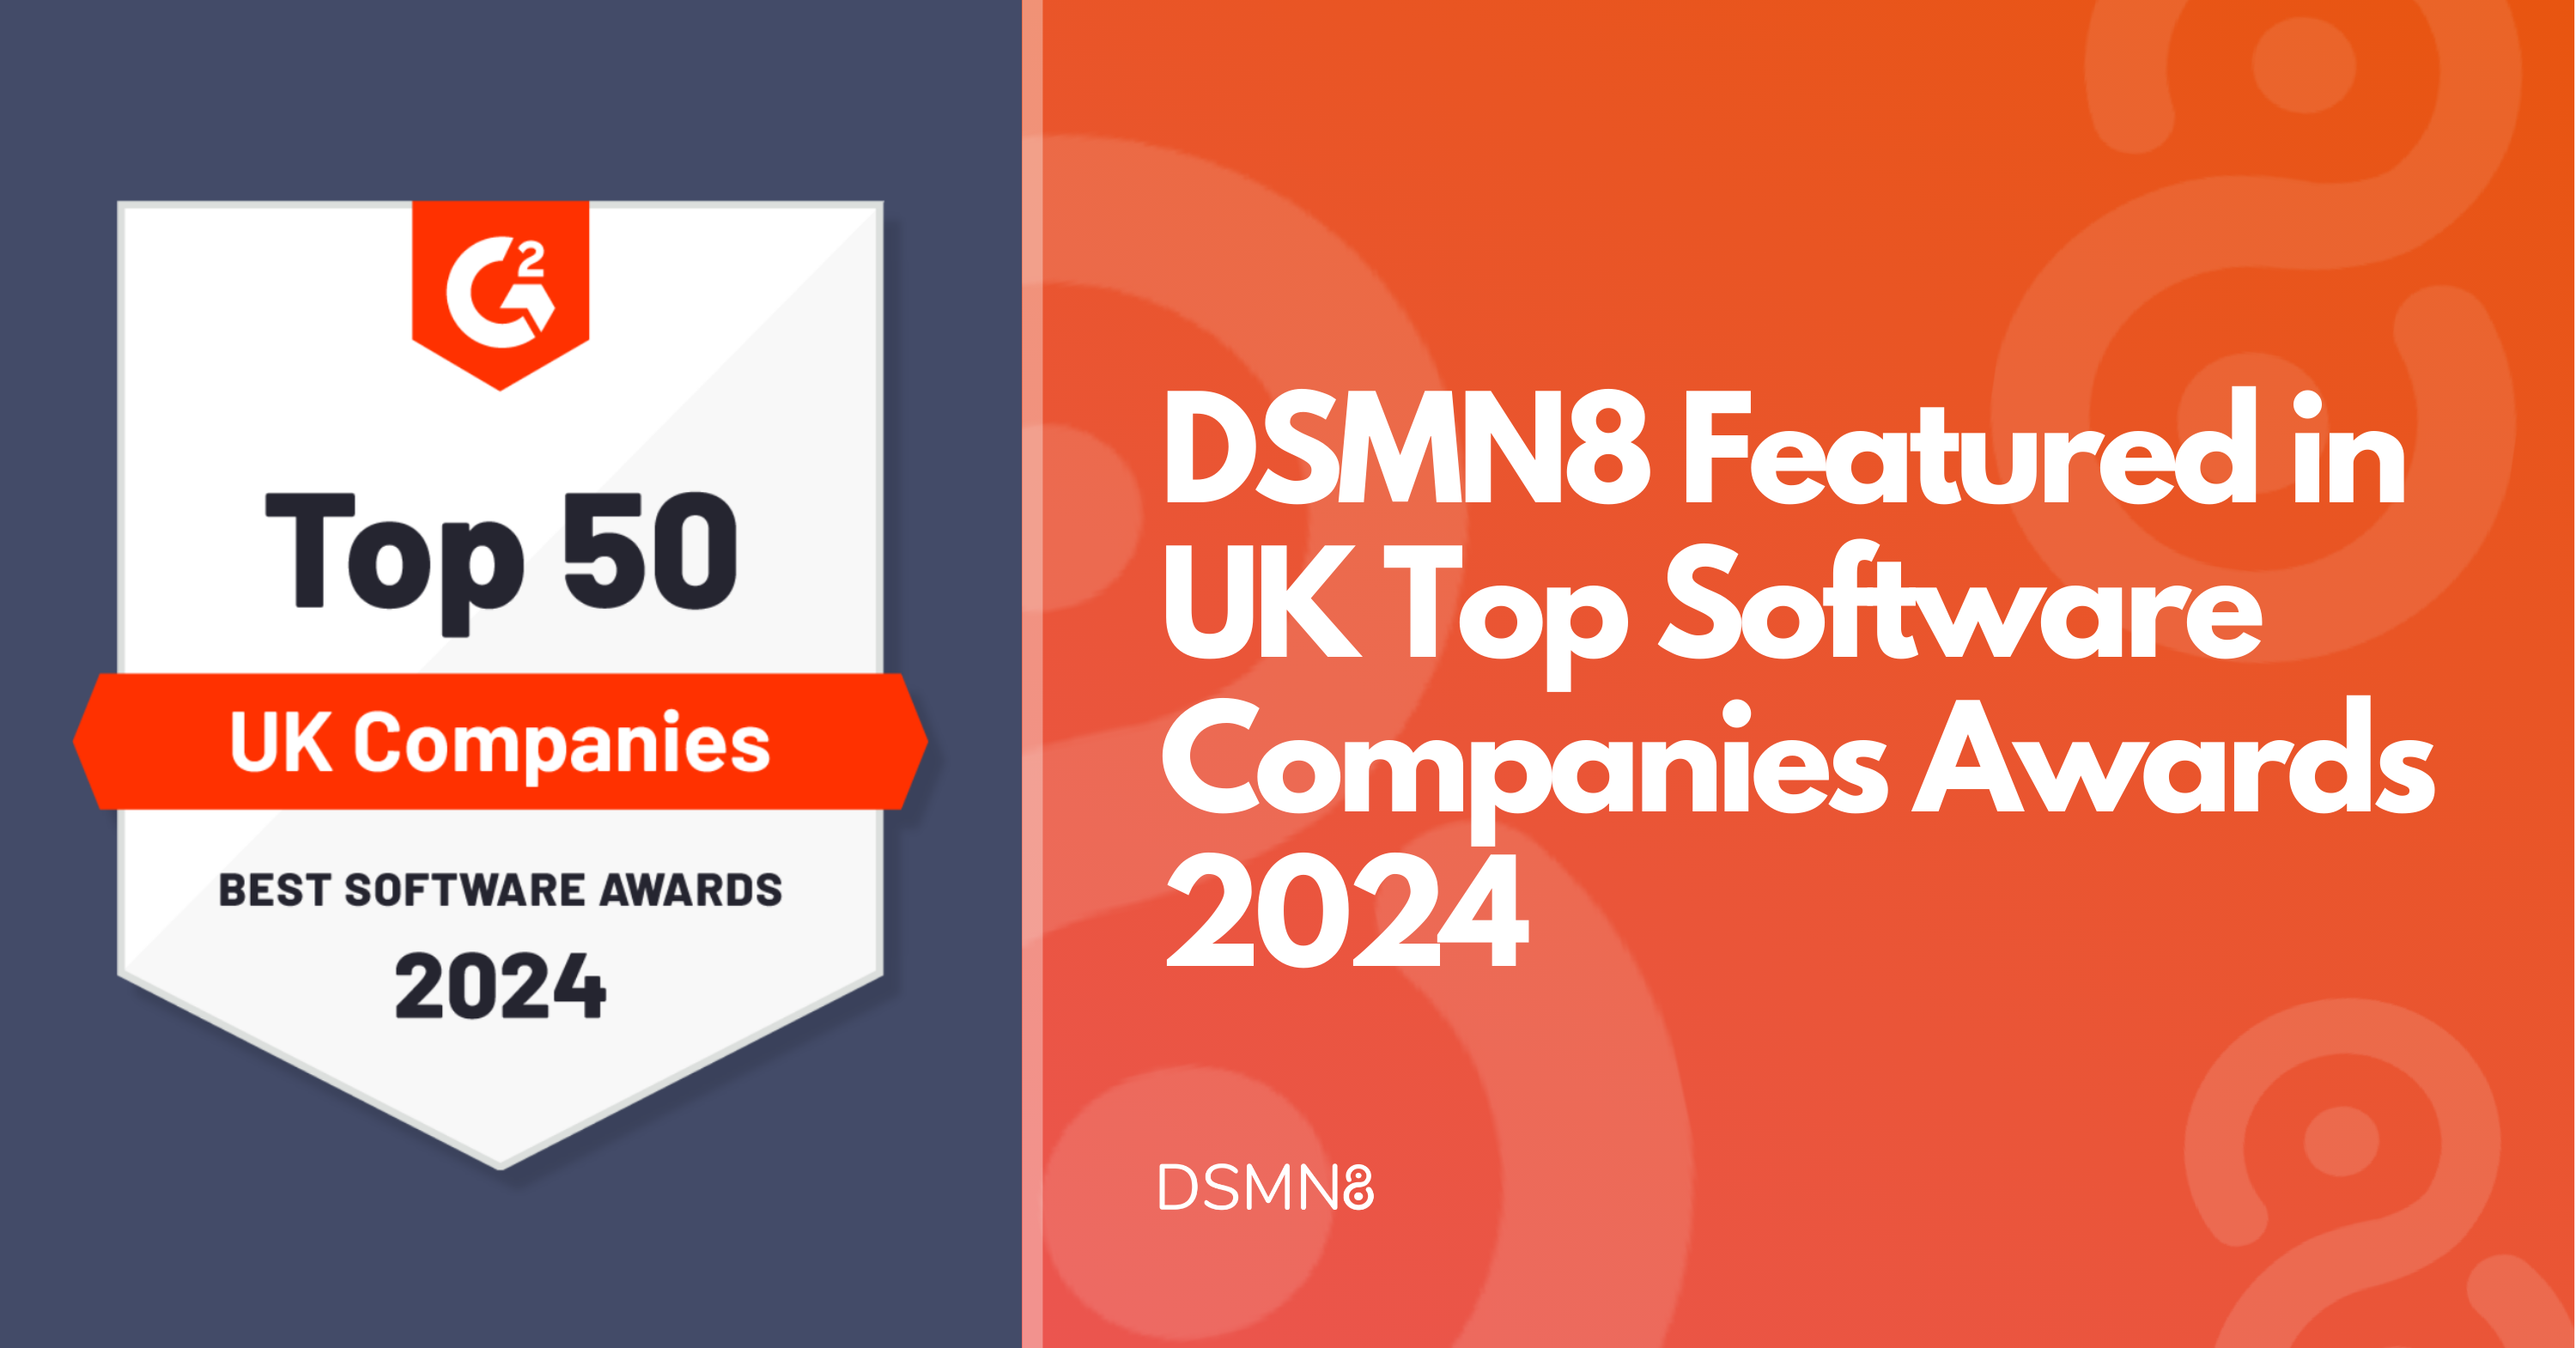 DSMN8 featured in UK top software companies awards 2024